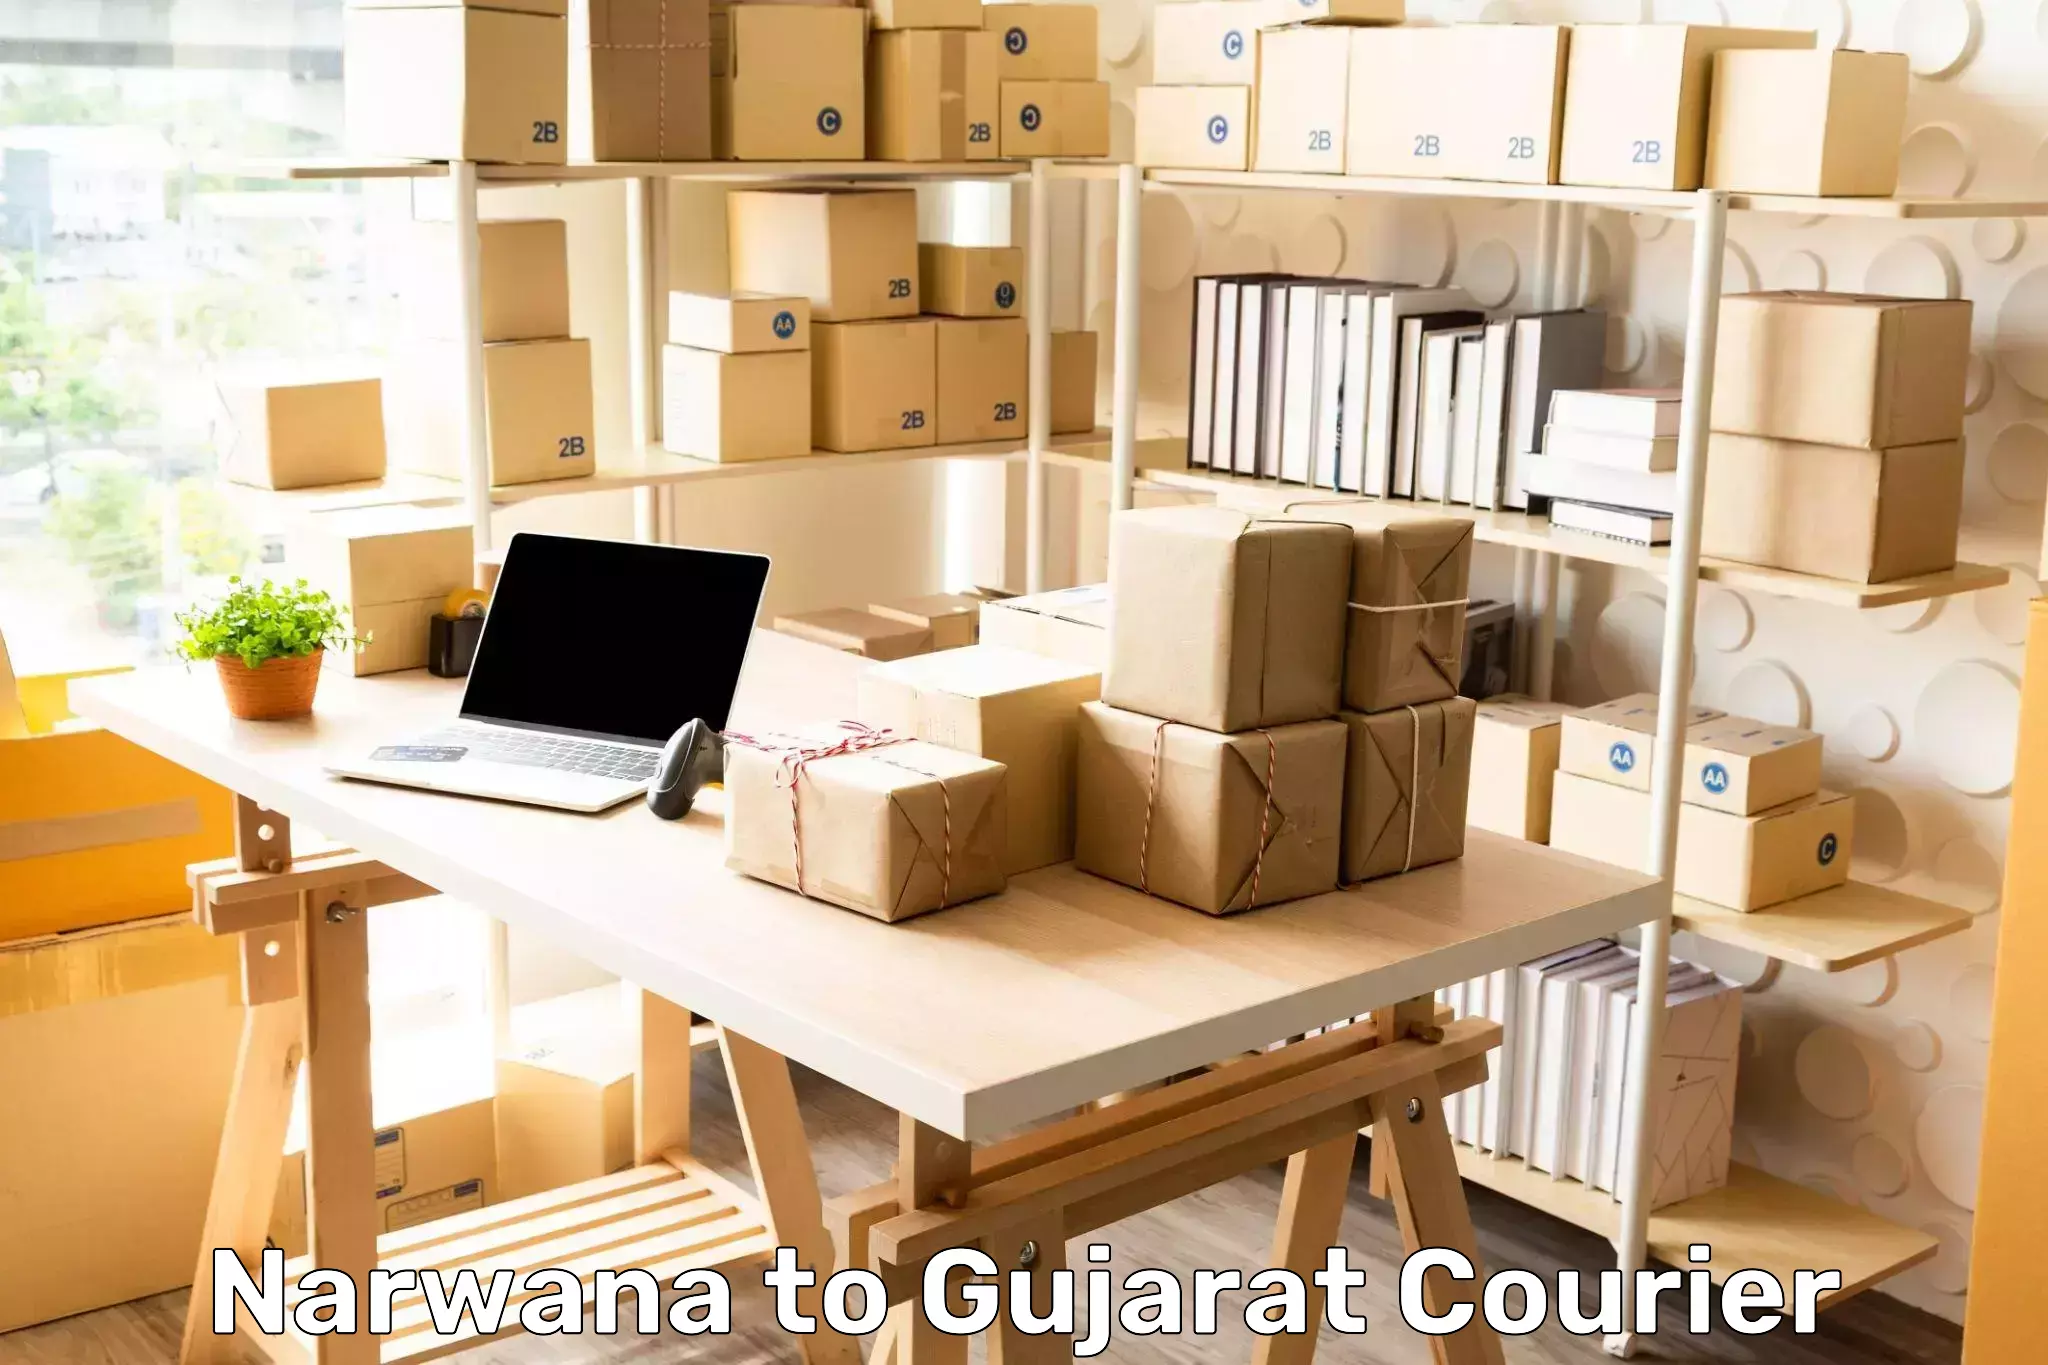 Global logistics network Narwana to Gujarat